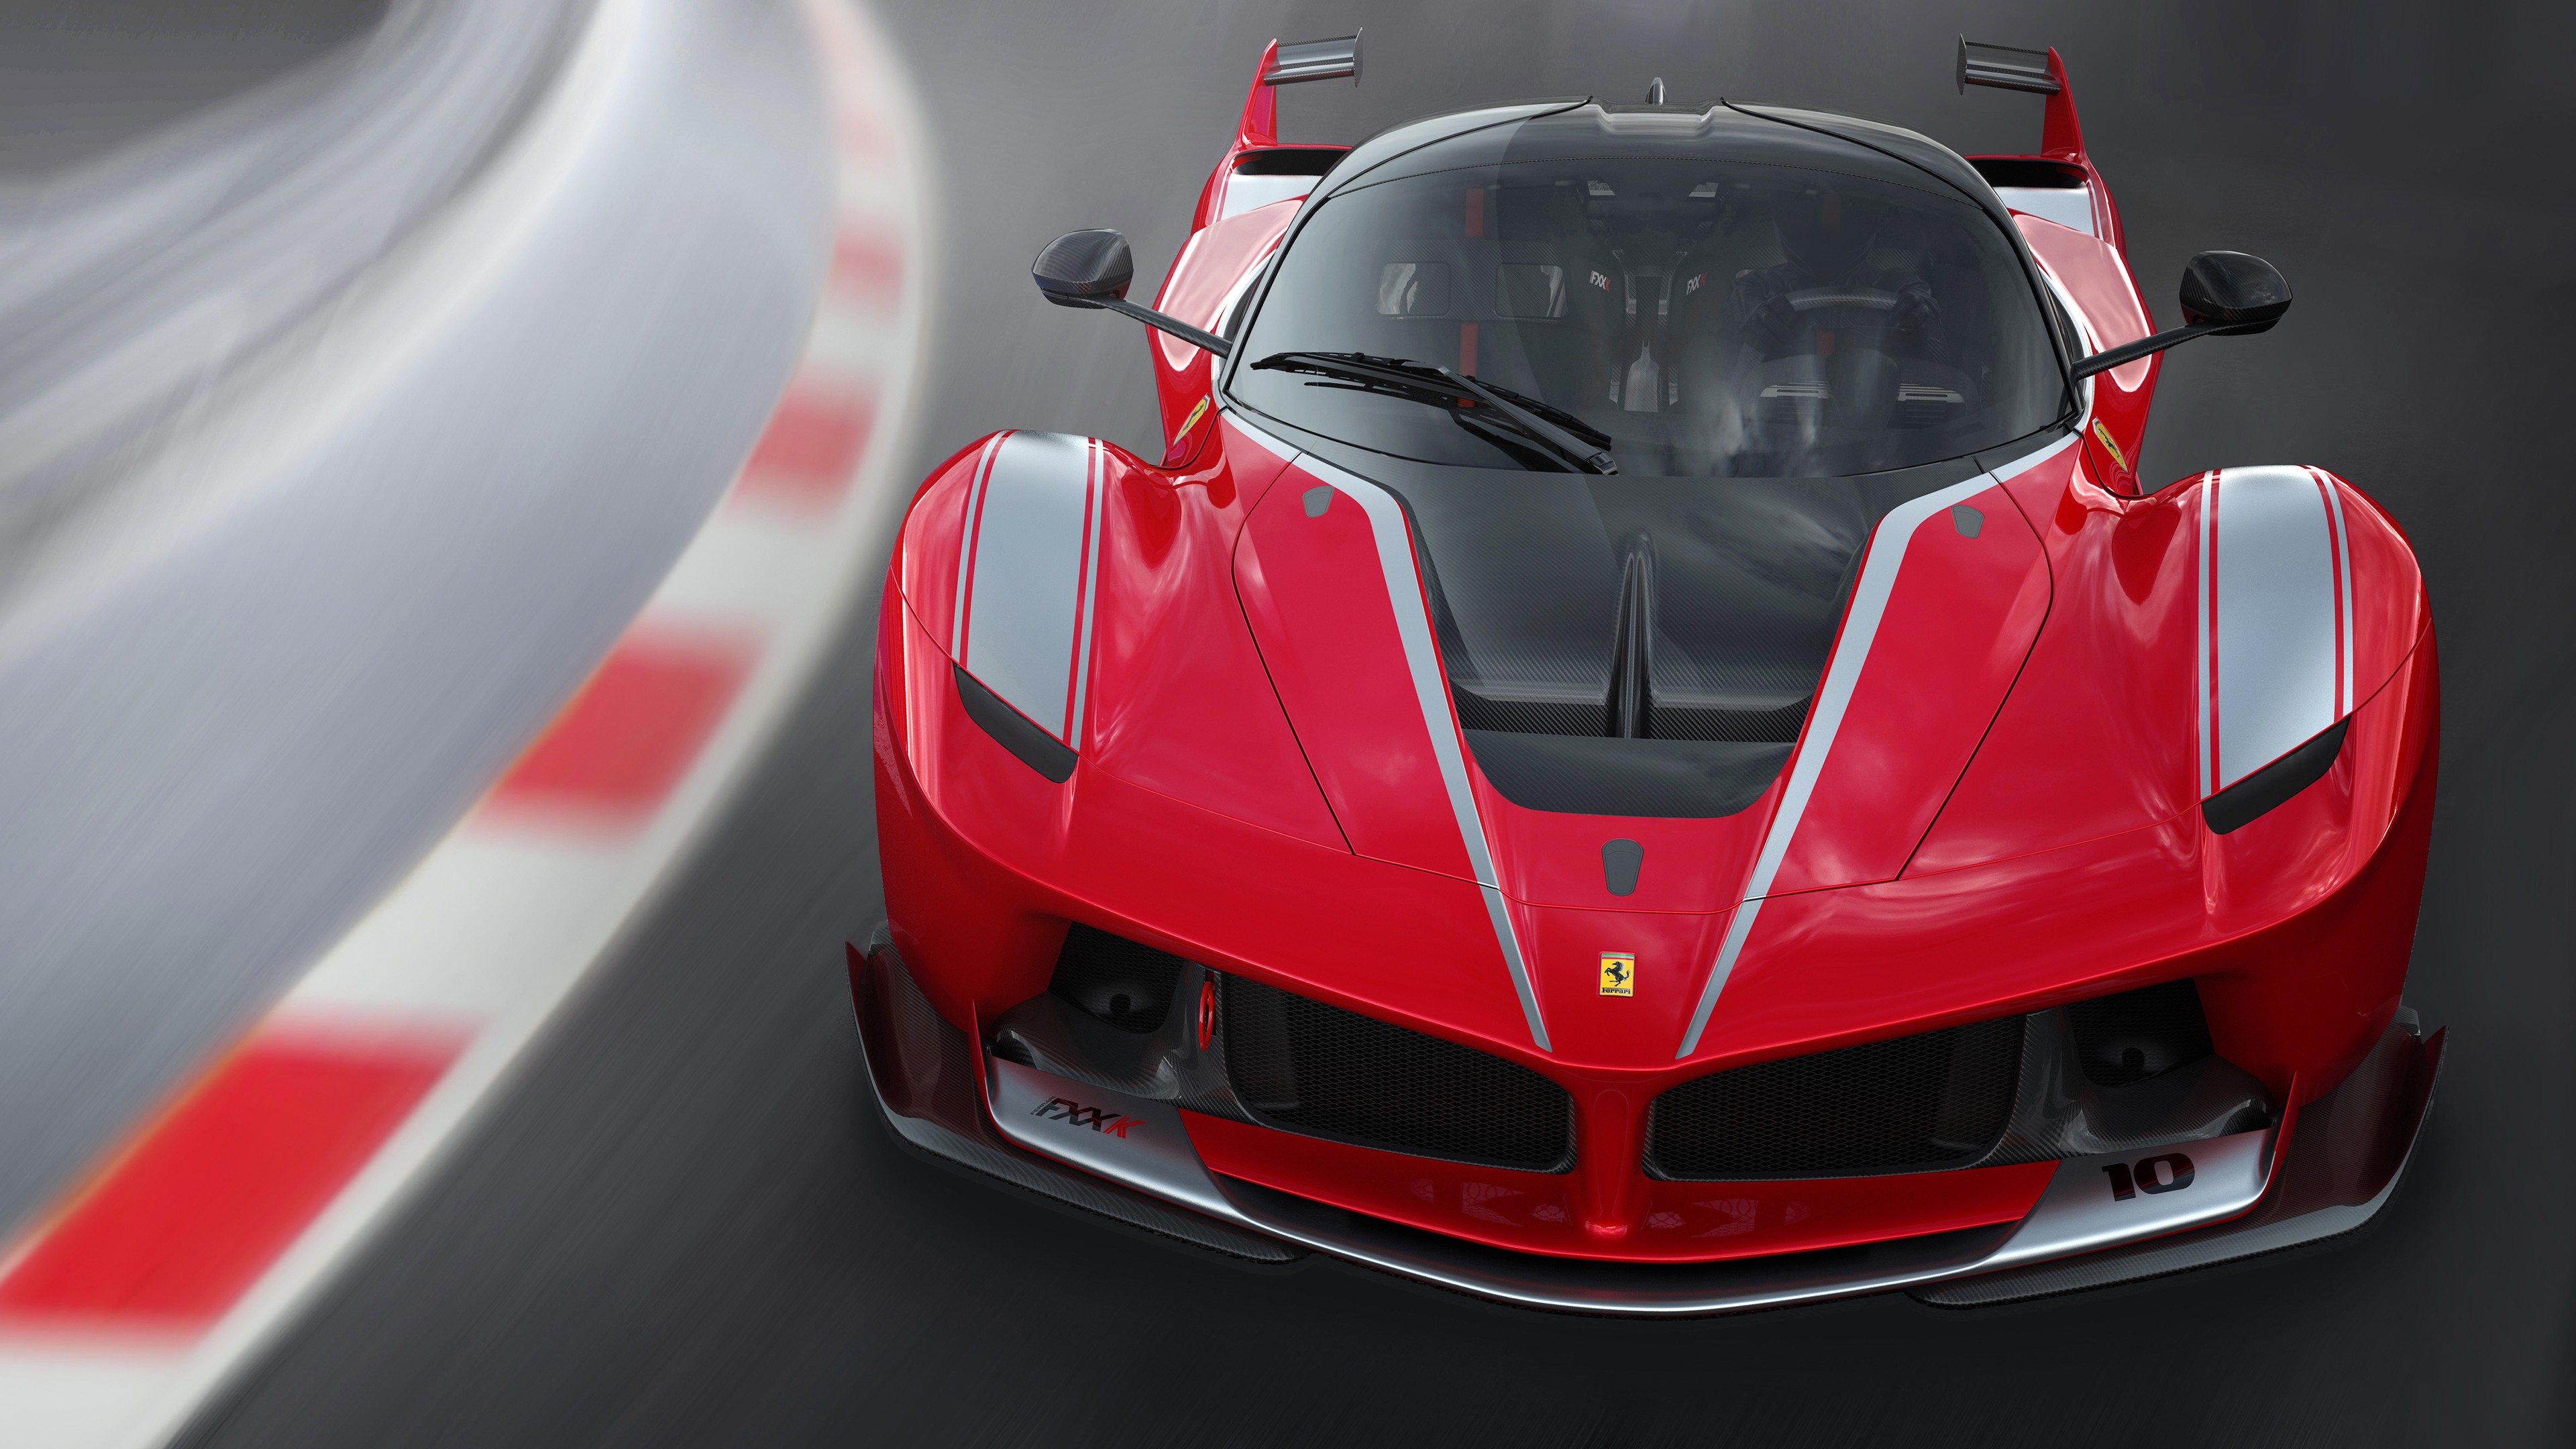 Ferrari FXXK, Car, Race Tracks, Motion Blur Wallpaper